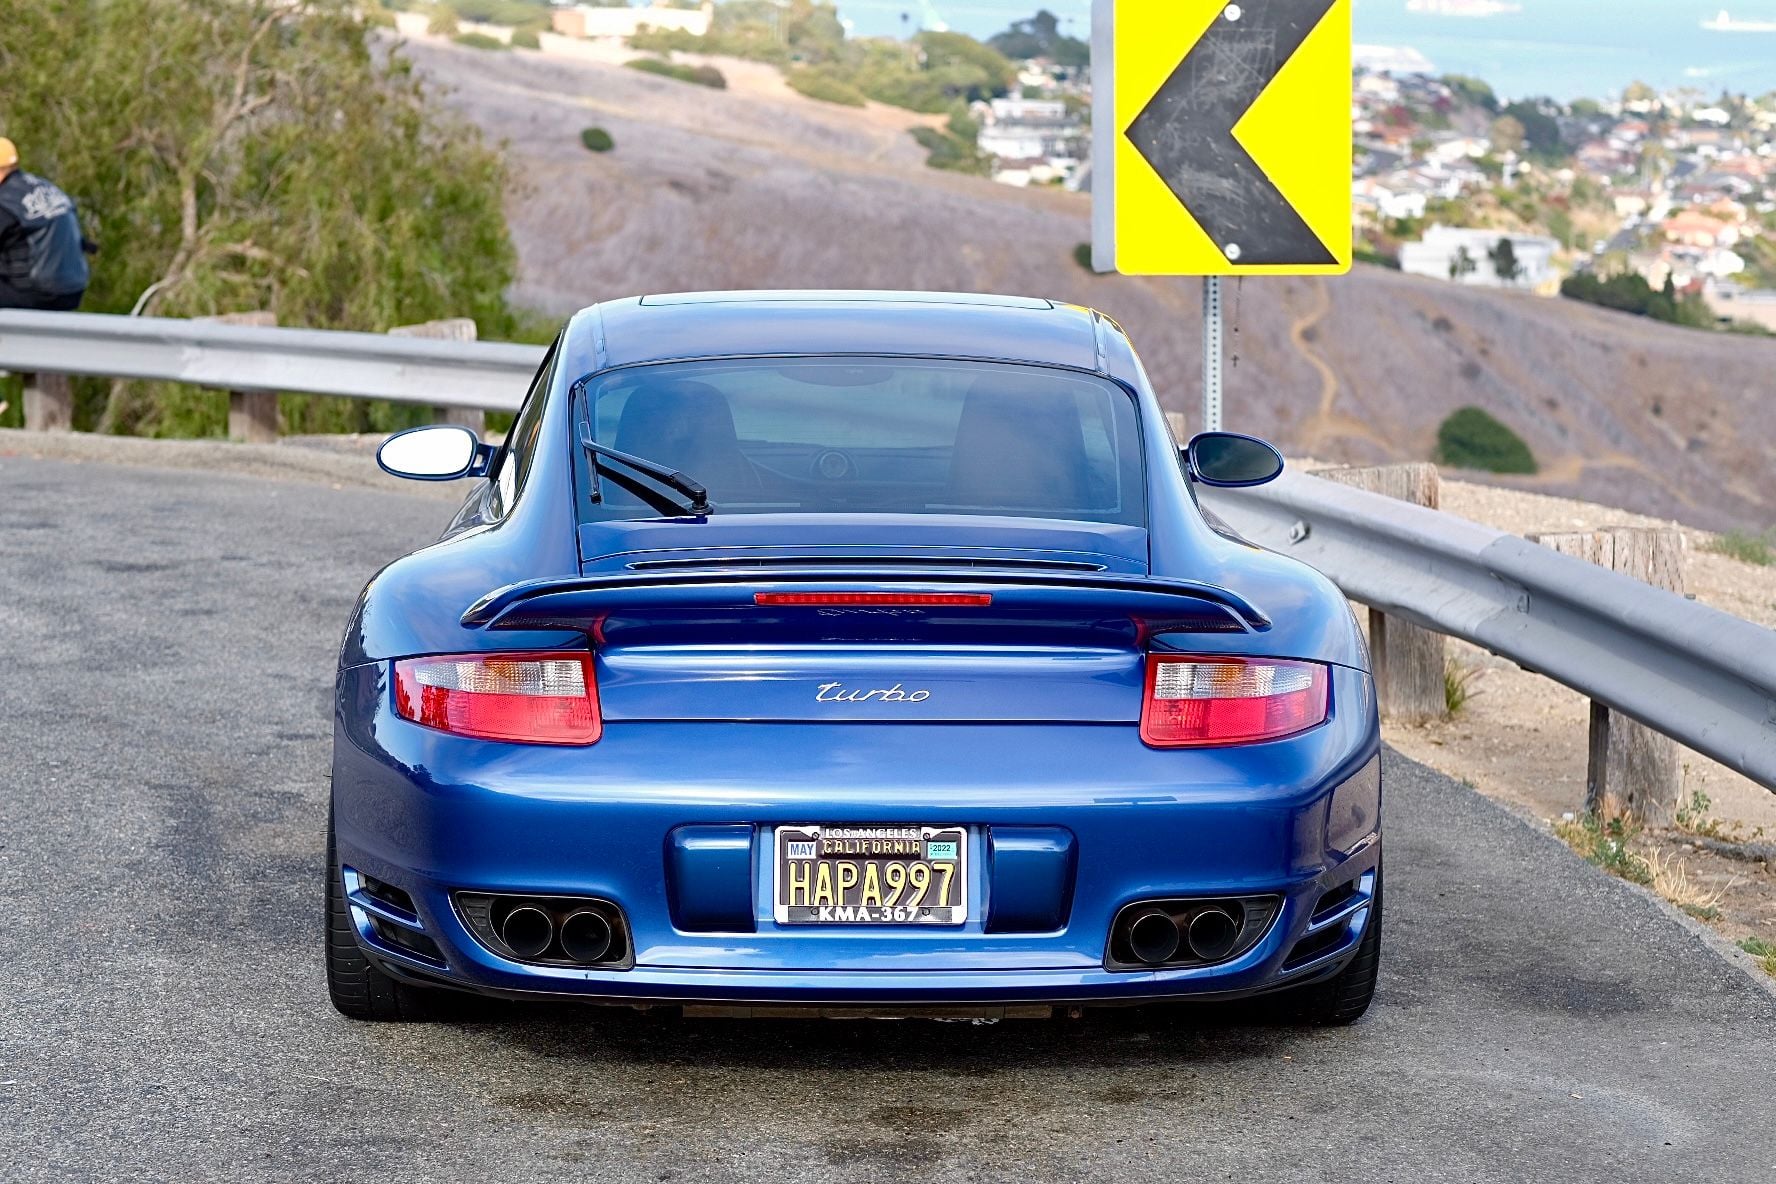 2007 Porsche 911 - 2007 Porsche 911 Turbo Coupe 6-speed - Cobalt Blue - Used - Los Angeles, CA 90275, United States